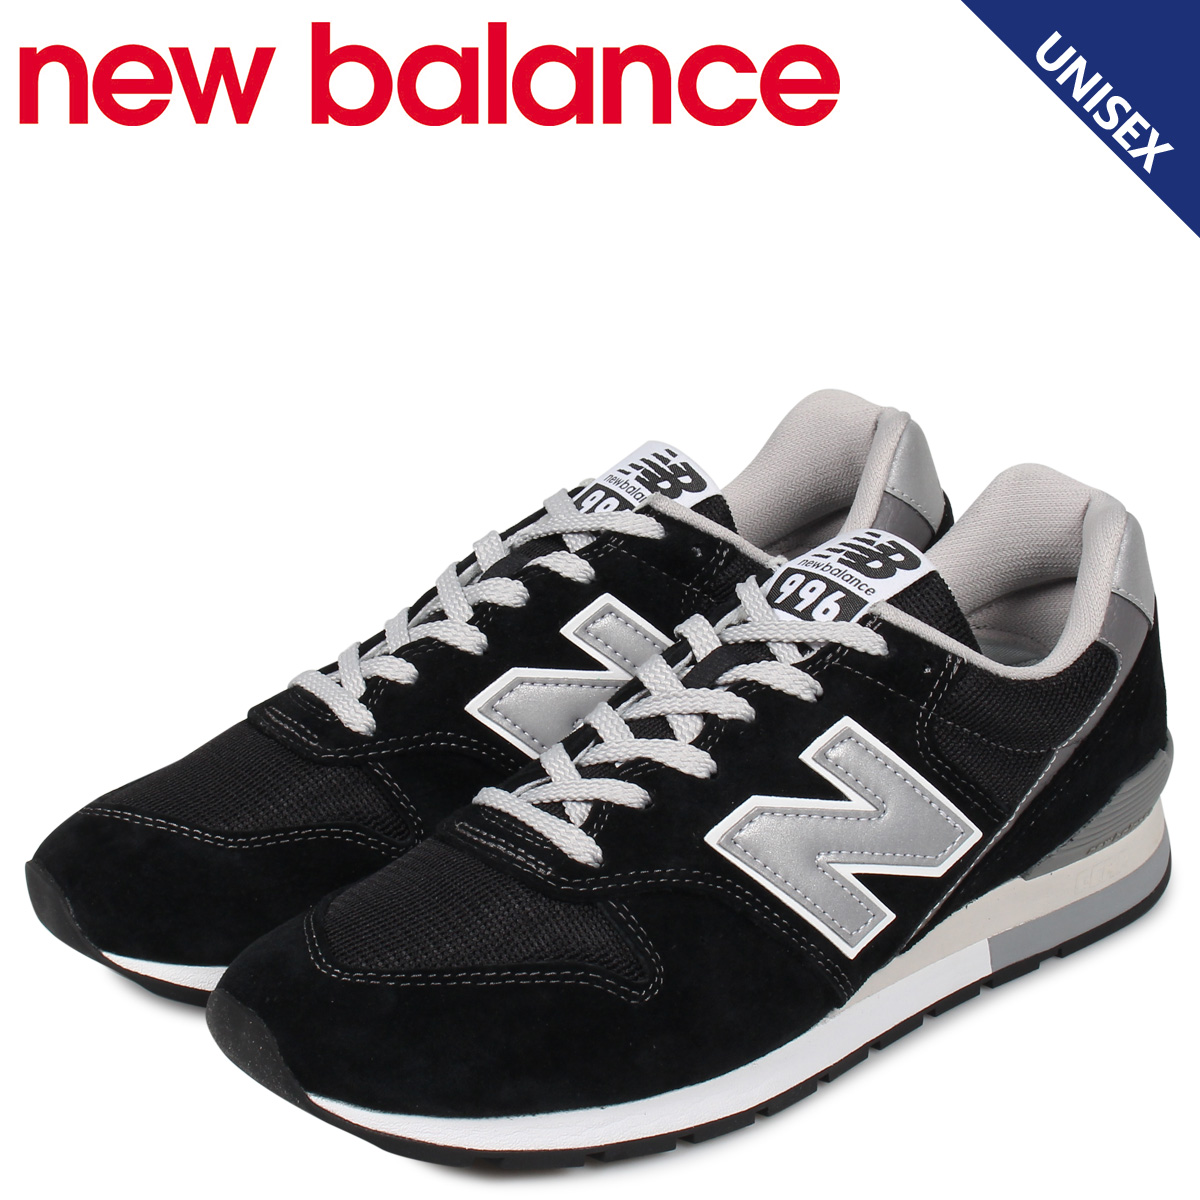 new balance 996 buy online